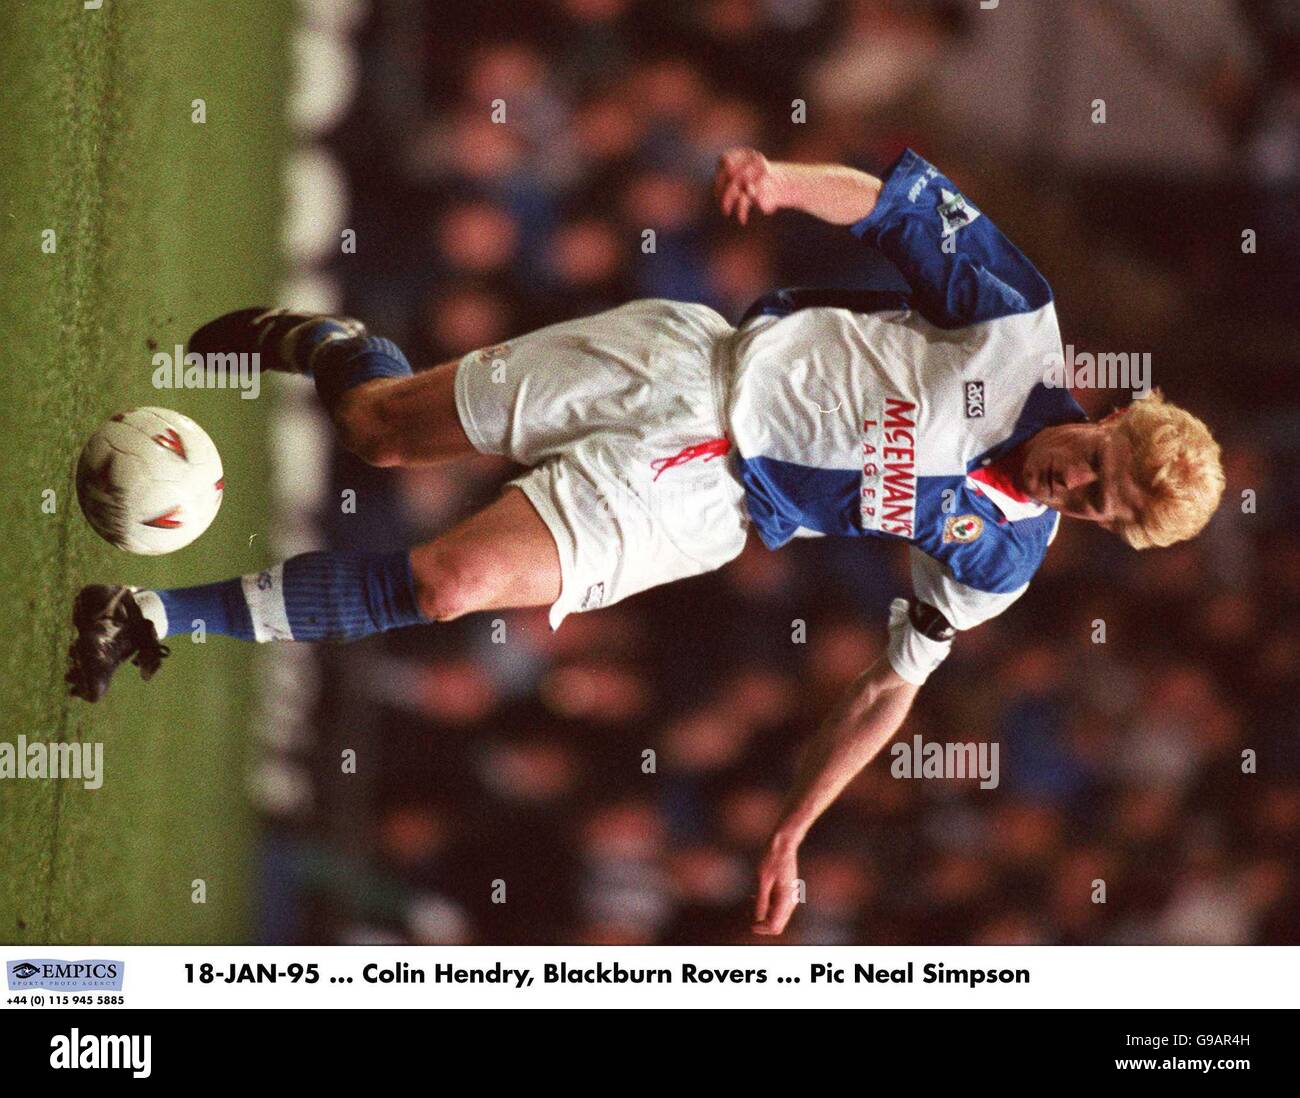 164169 Colin Hendry. 18 GENNAIO 95. Colin Hendry, Blackburn Rovers Foto Stock